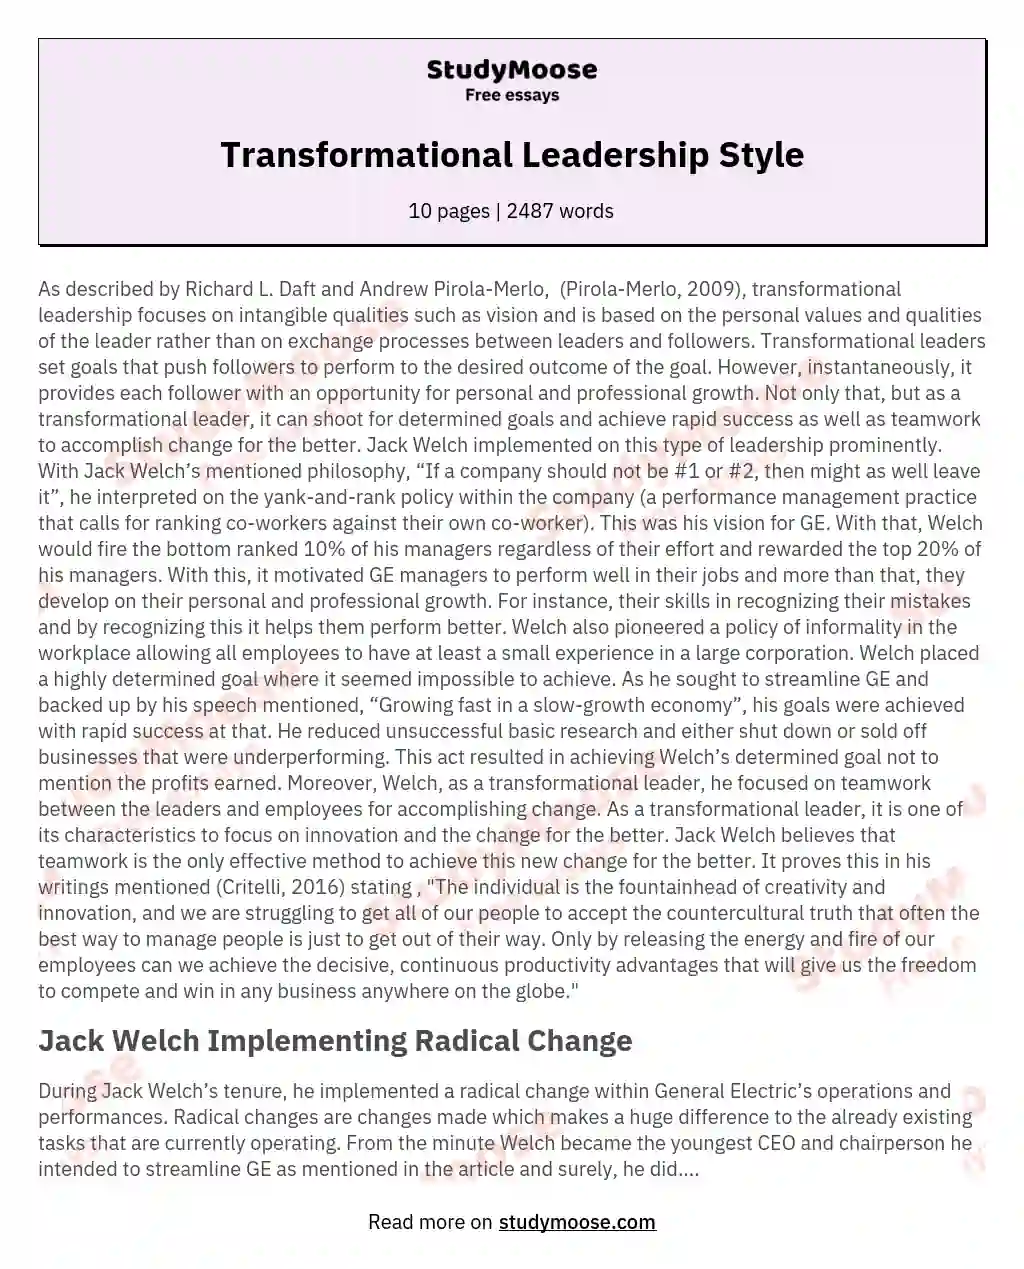 Transformational Leadership Style essay